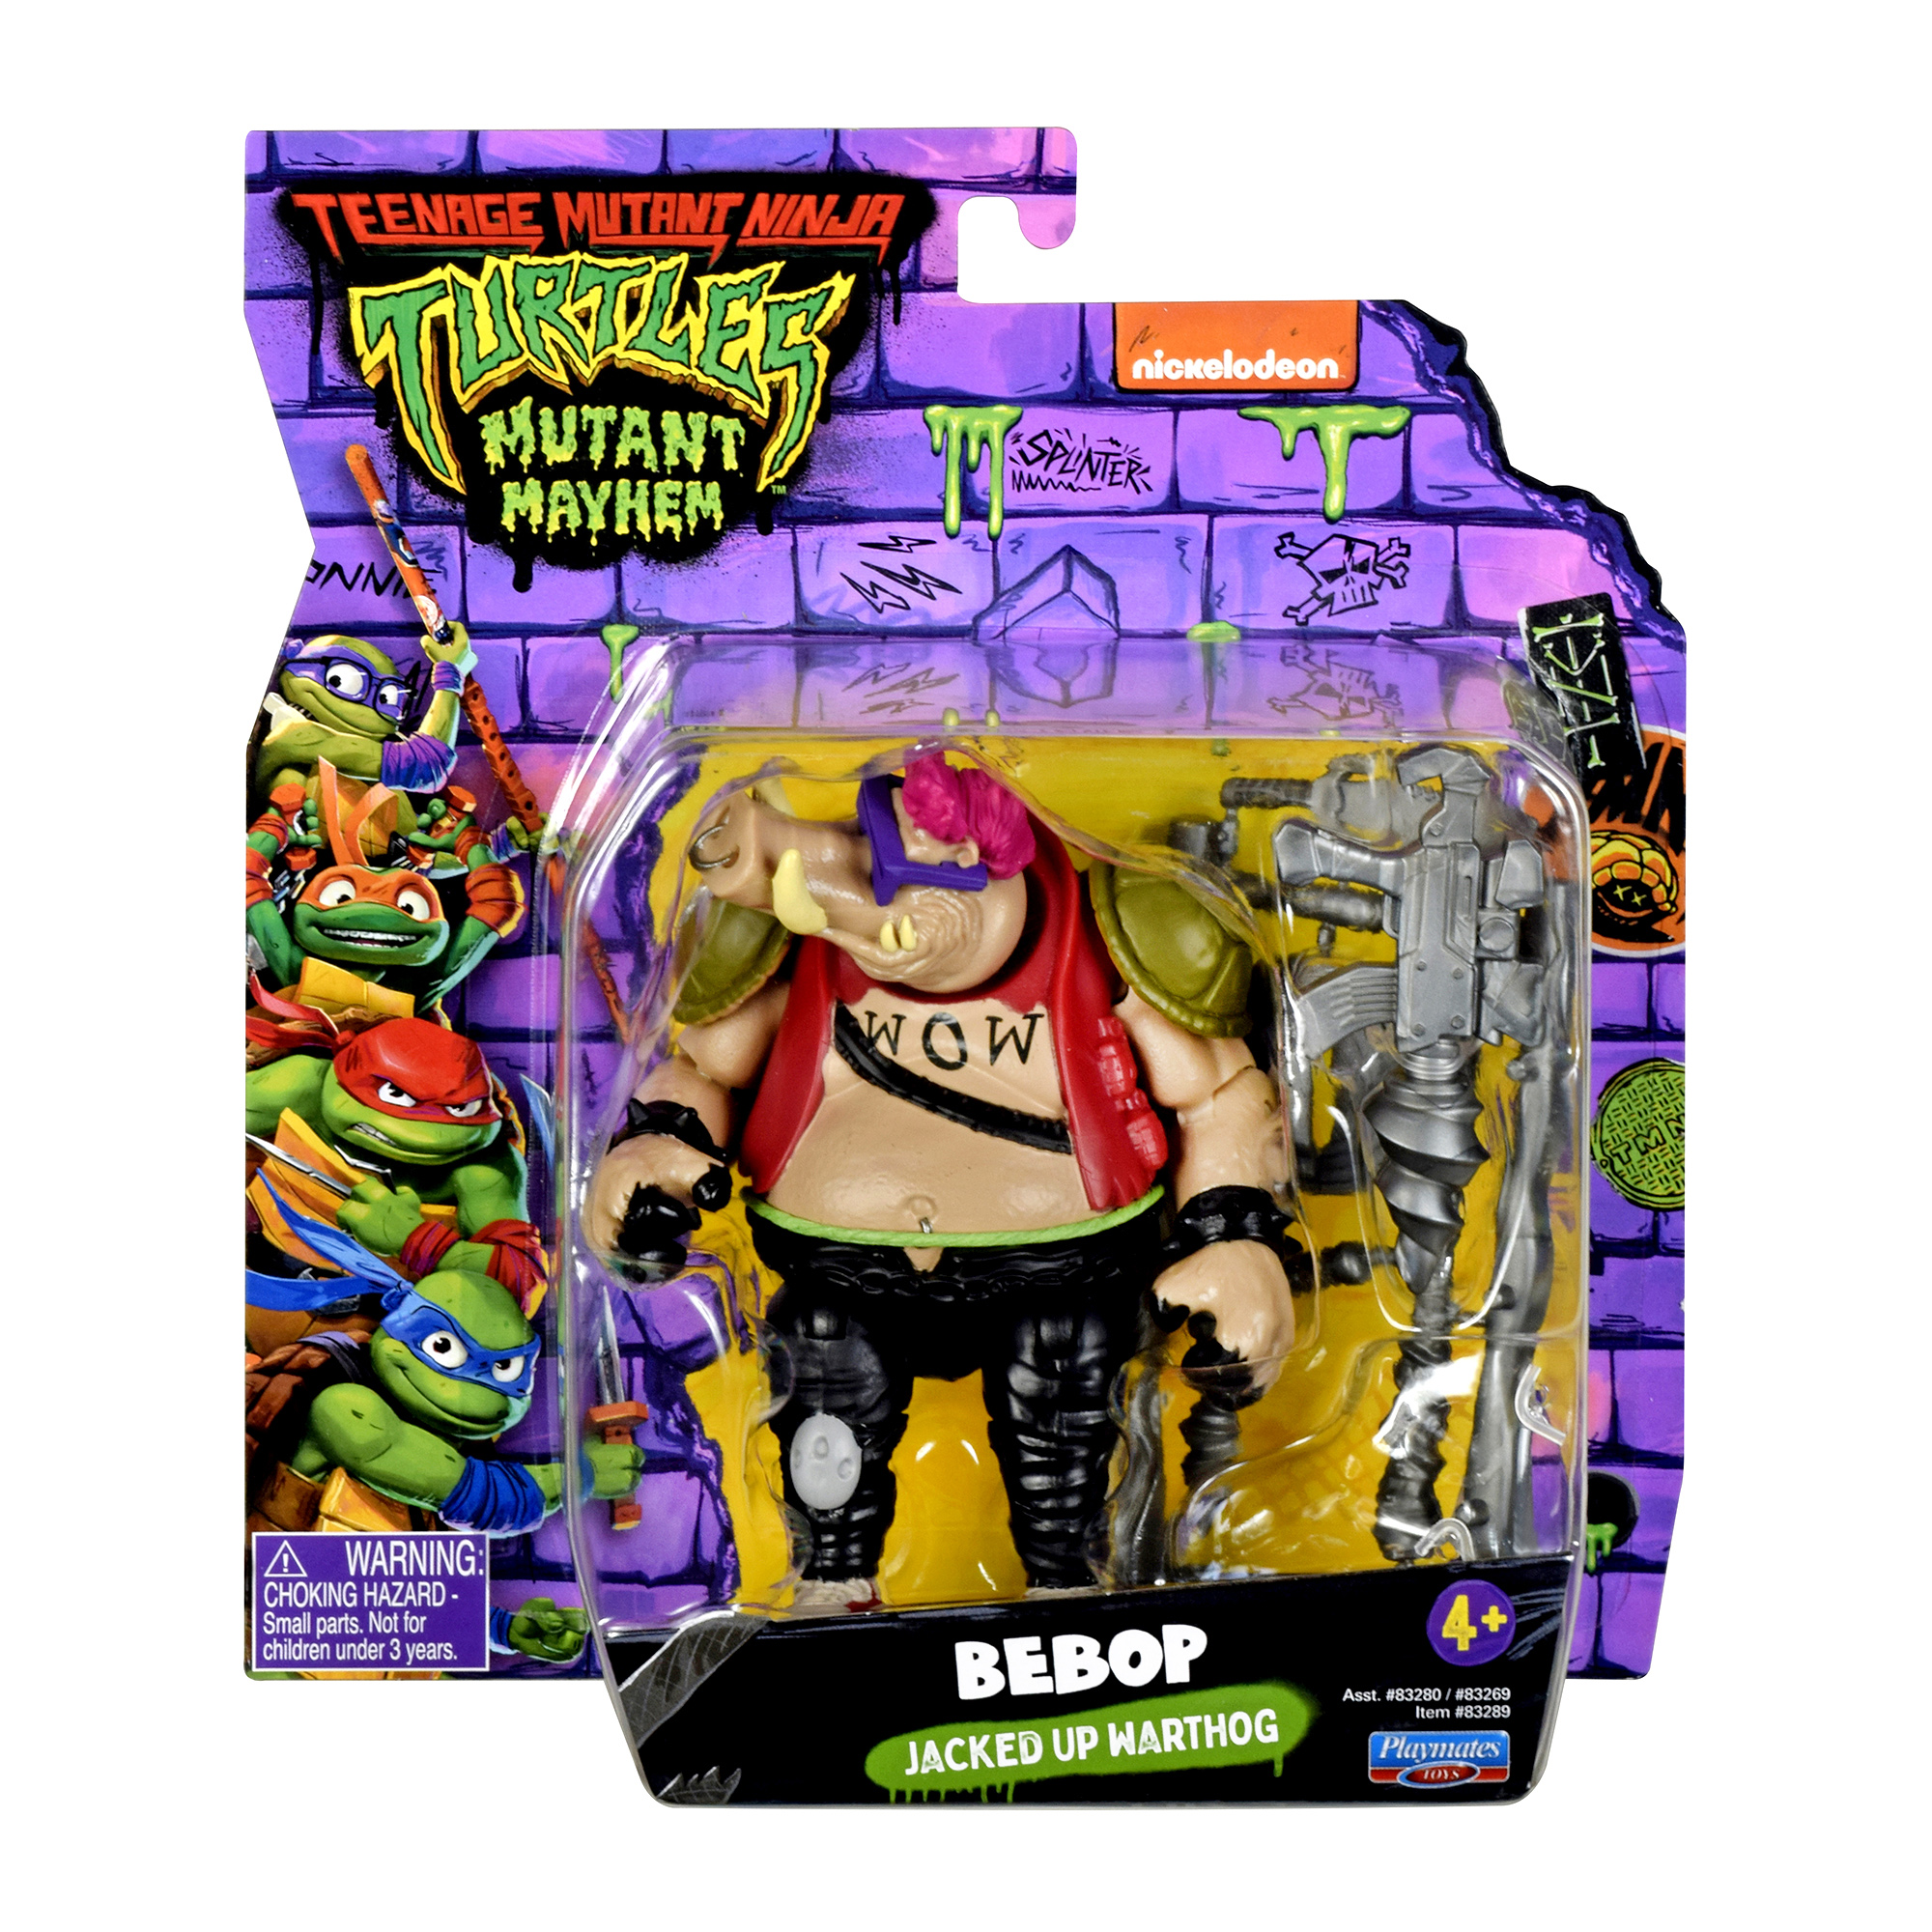 Teenage Mutant Ninja Turtles: Mutant Mayhem 4.25” Bebop Basic Action Figure by Playmates Toys - image 5 of 7